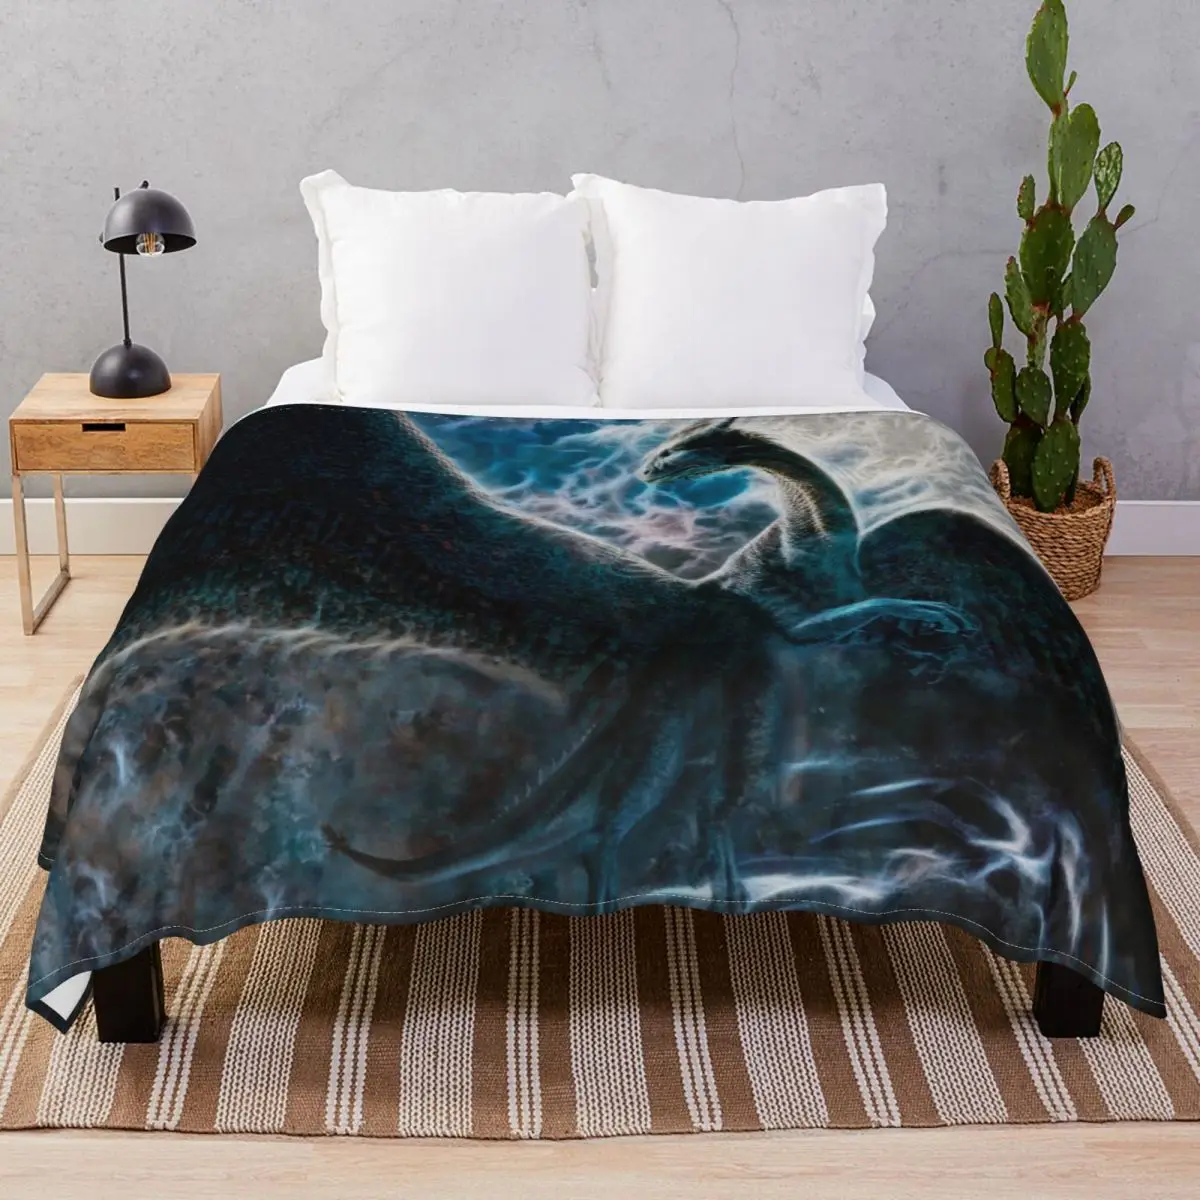 Saphira The Dragon Blankets Coral Fleece Printed Multi-function Throw Blanket for Bedding Sofa Camp Cinema